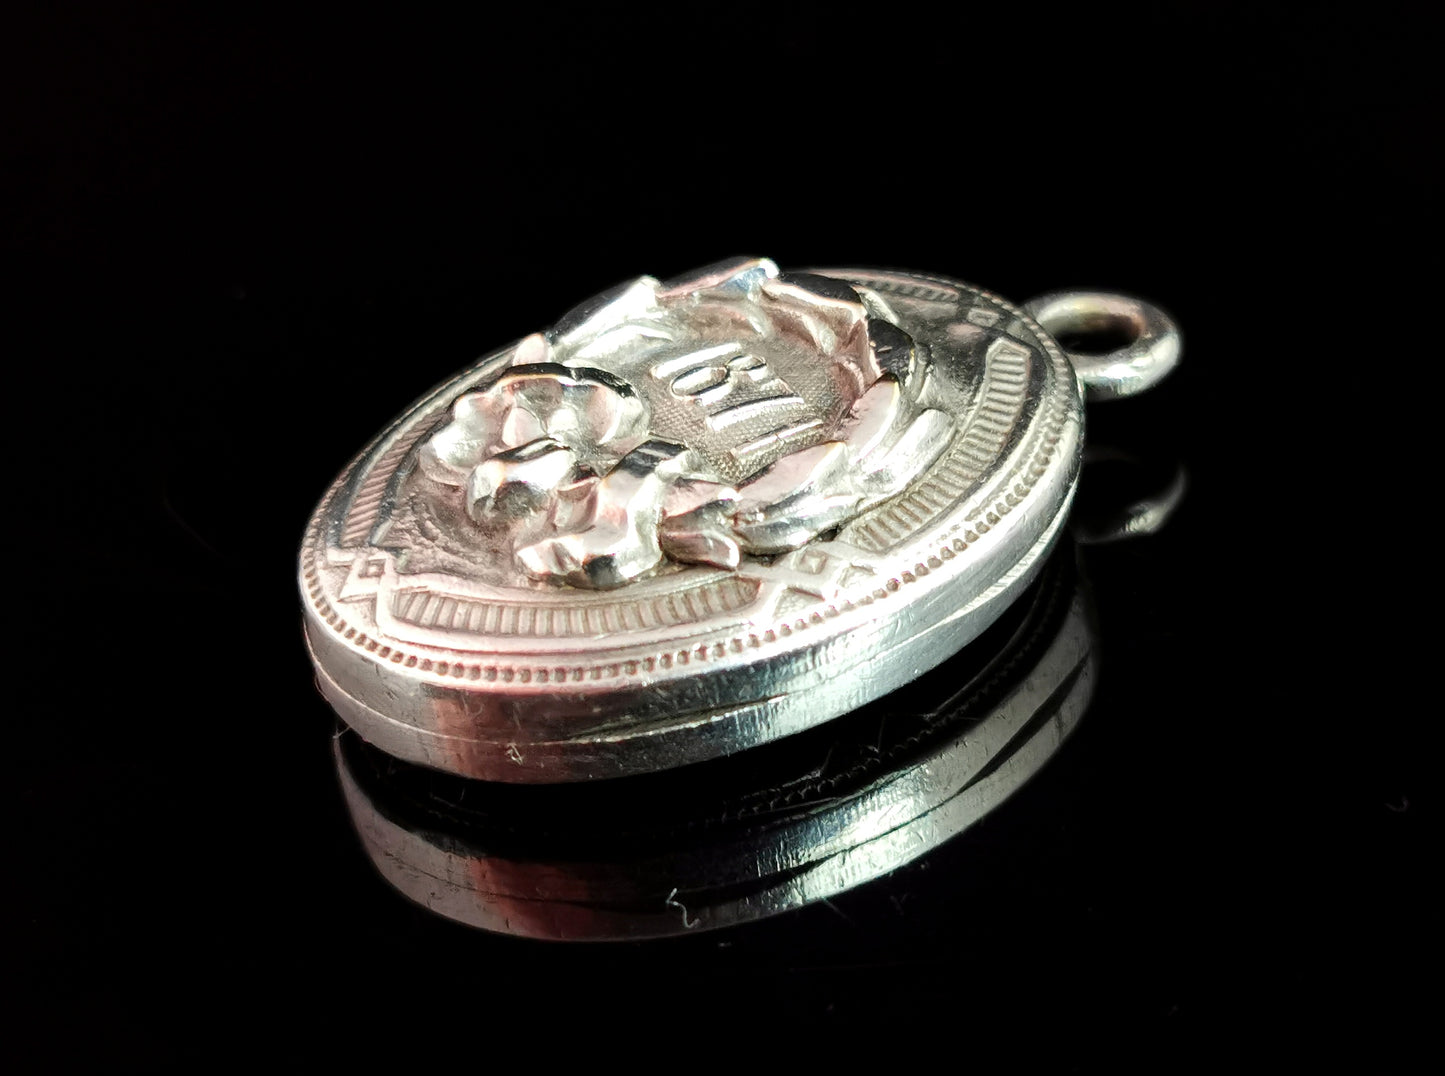 Antique Victorian silver locket, 1871, pendant